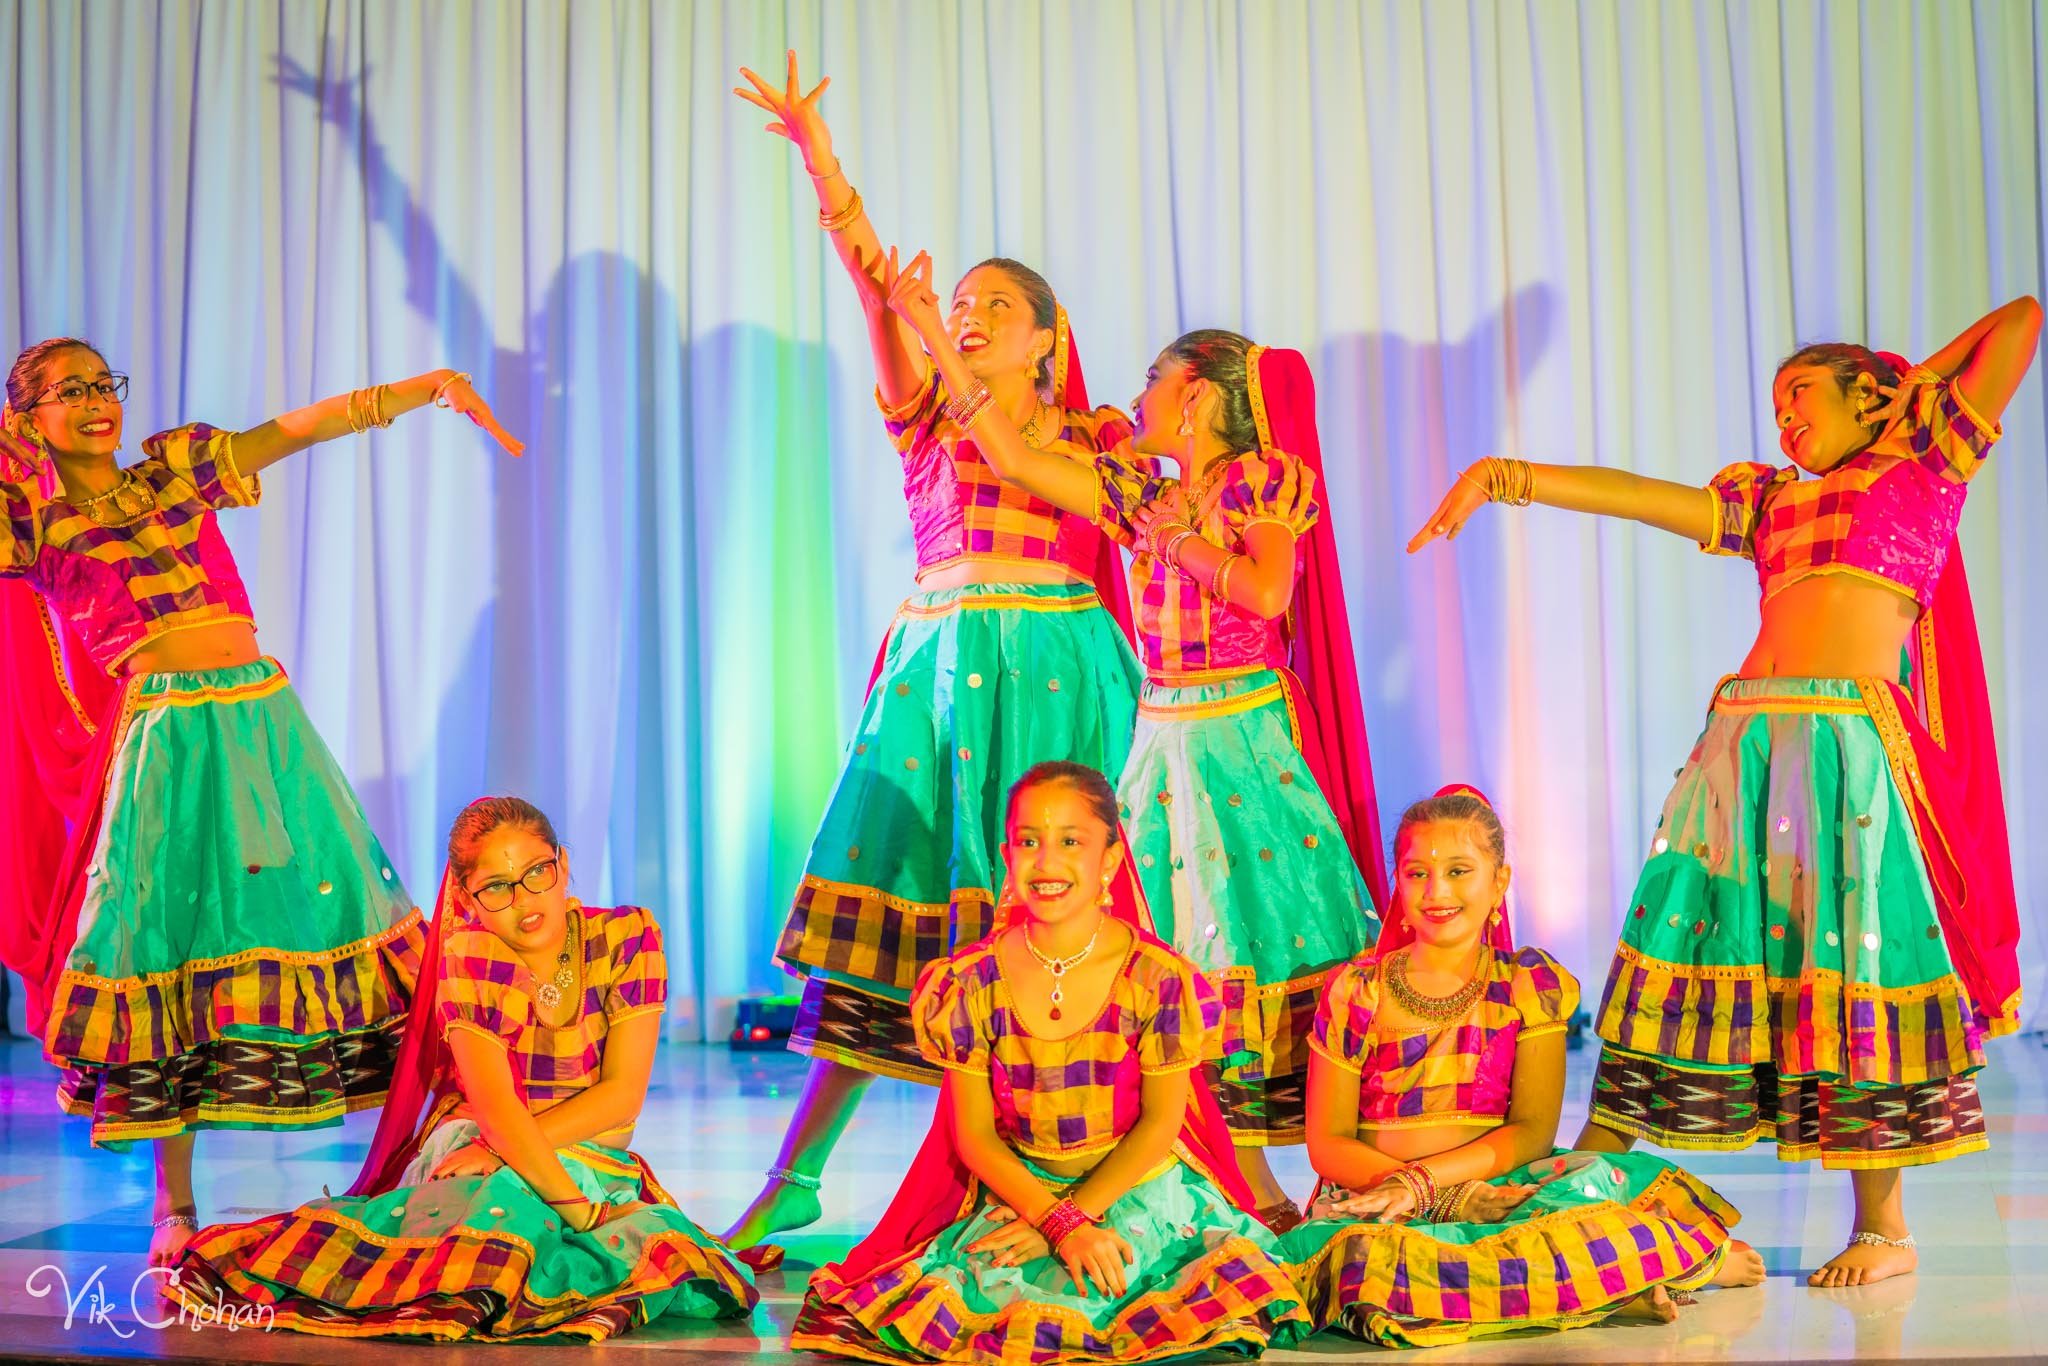 2022-11-05-Nritya-Academy-of-Indian-Dances-FOILV-Diwali-Dhamaka-Vik-Chohan-Photography-Photo-Booth-Social-Media-VCP-409.jpg